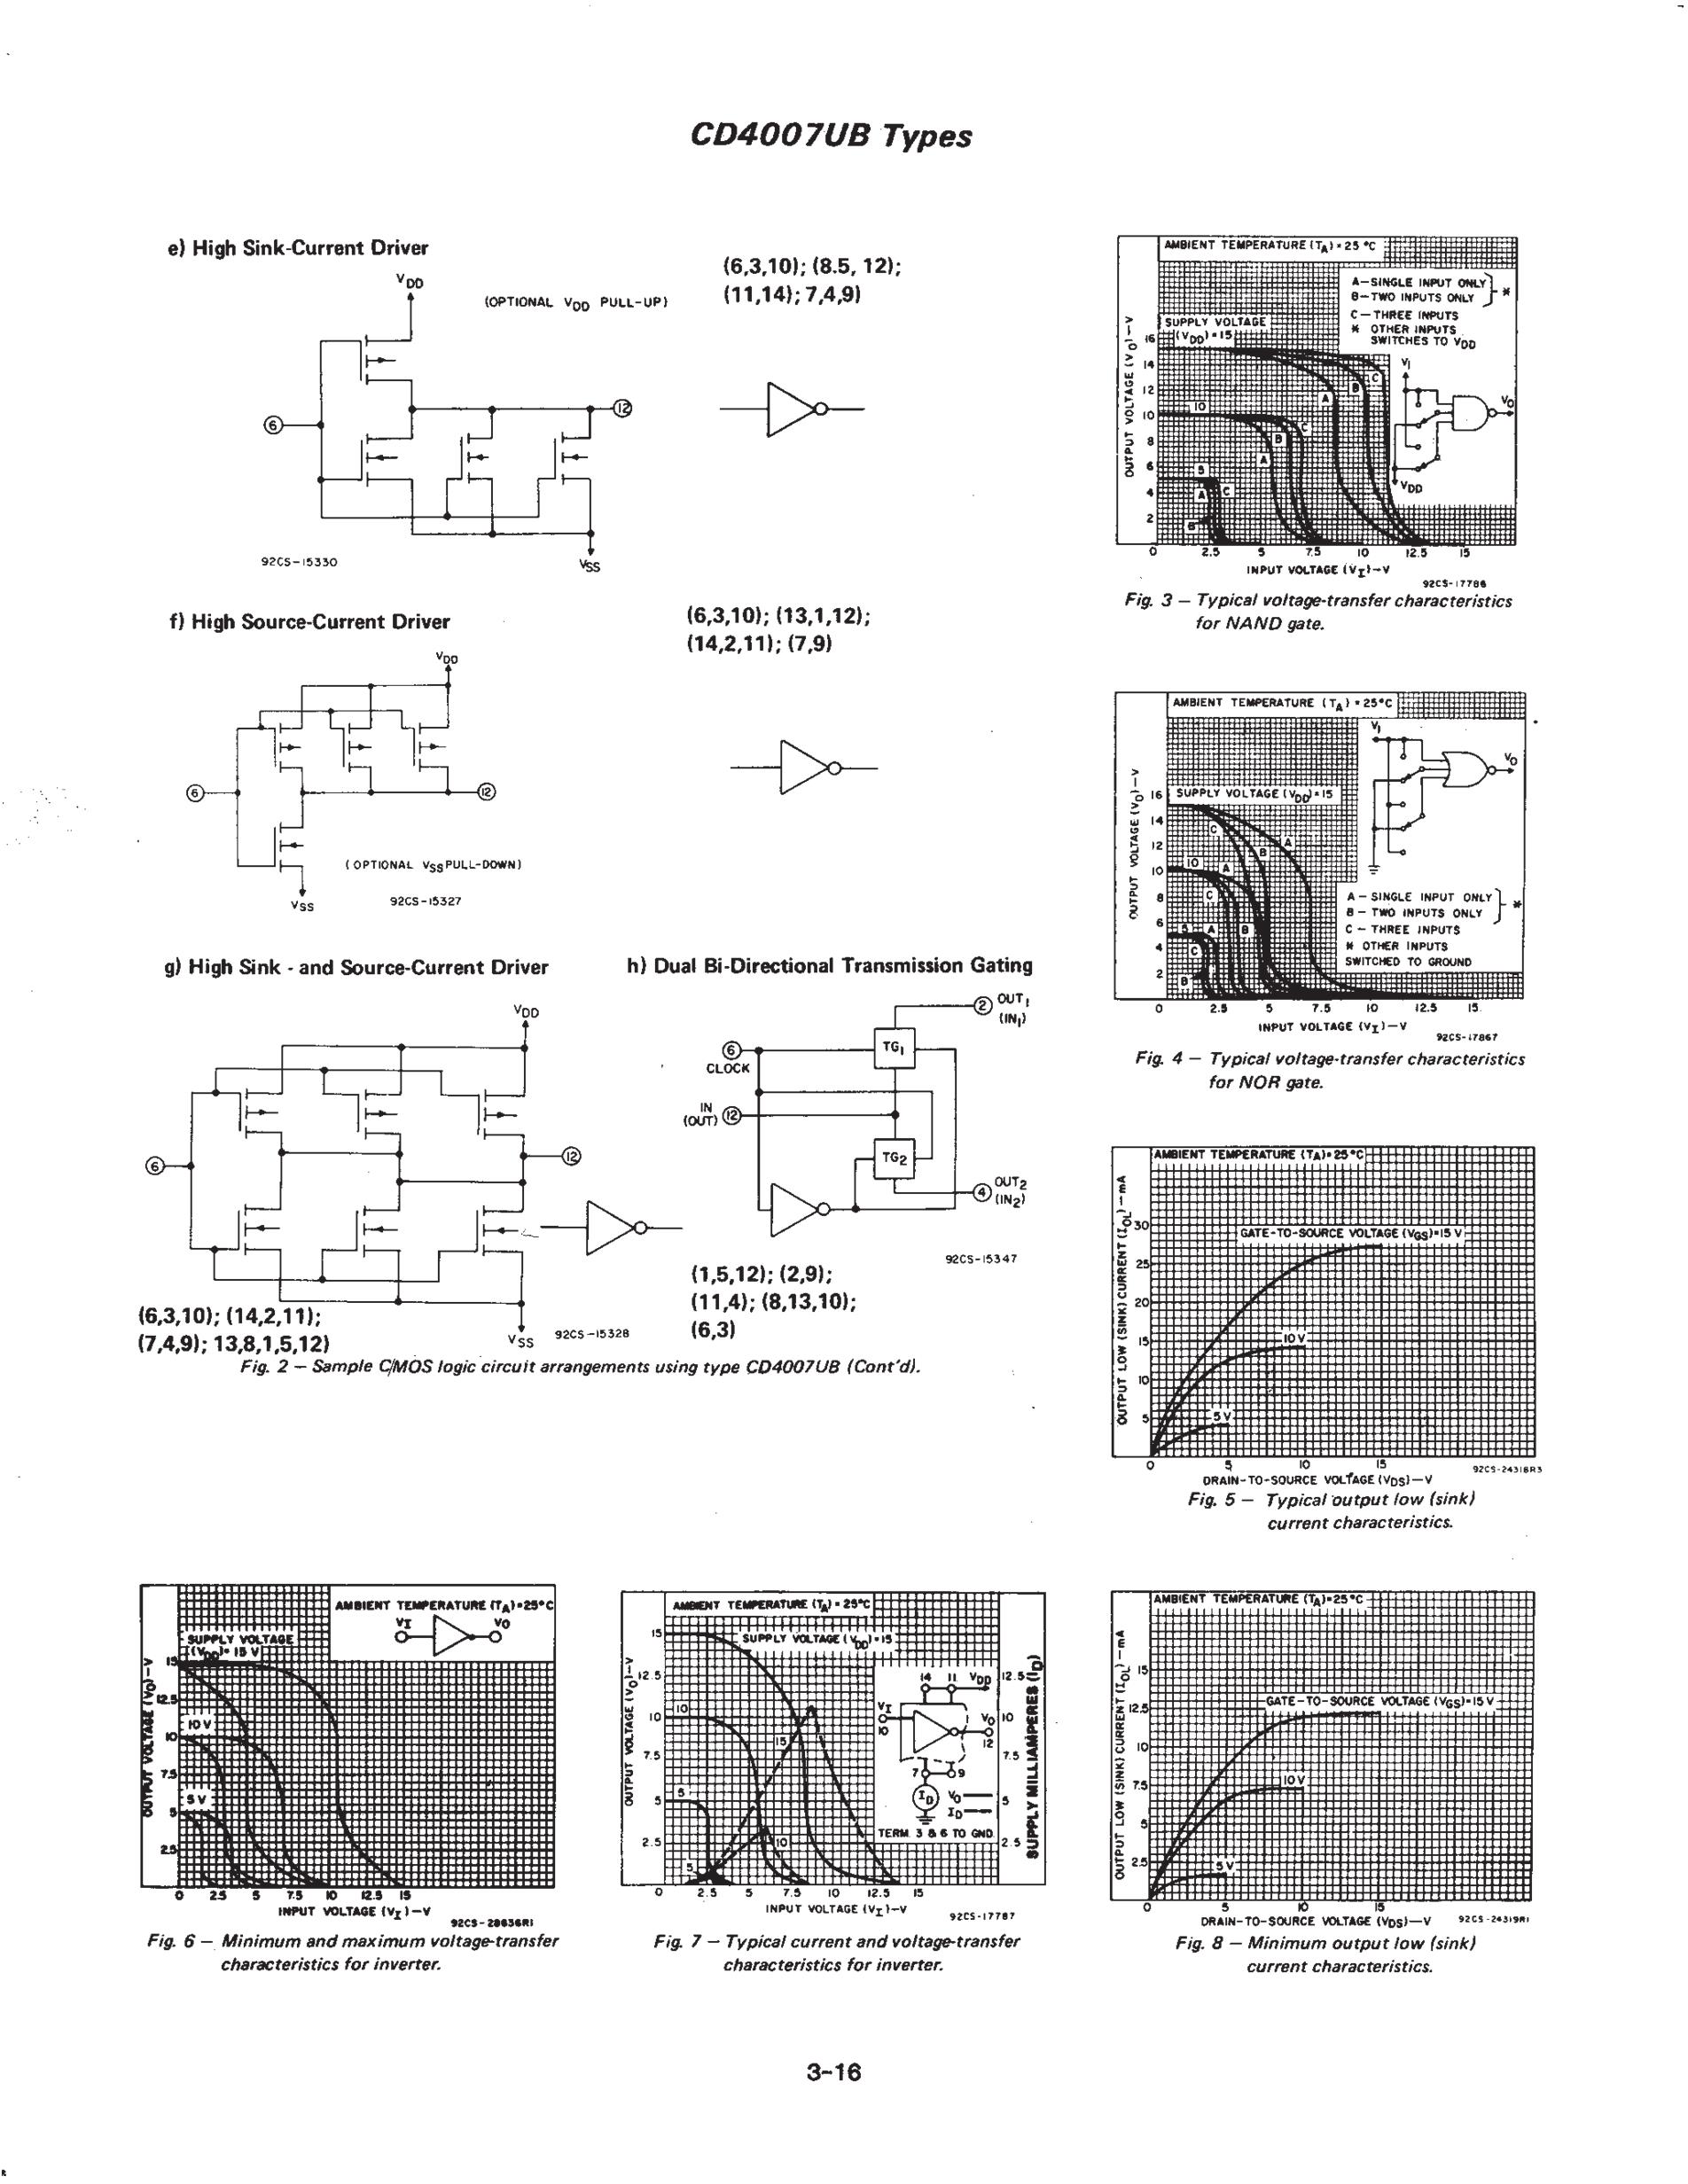 CD40192BMJ's pdf picture 3